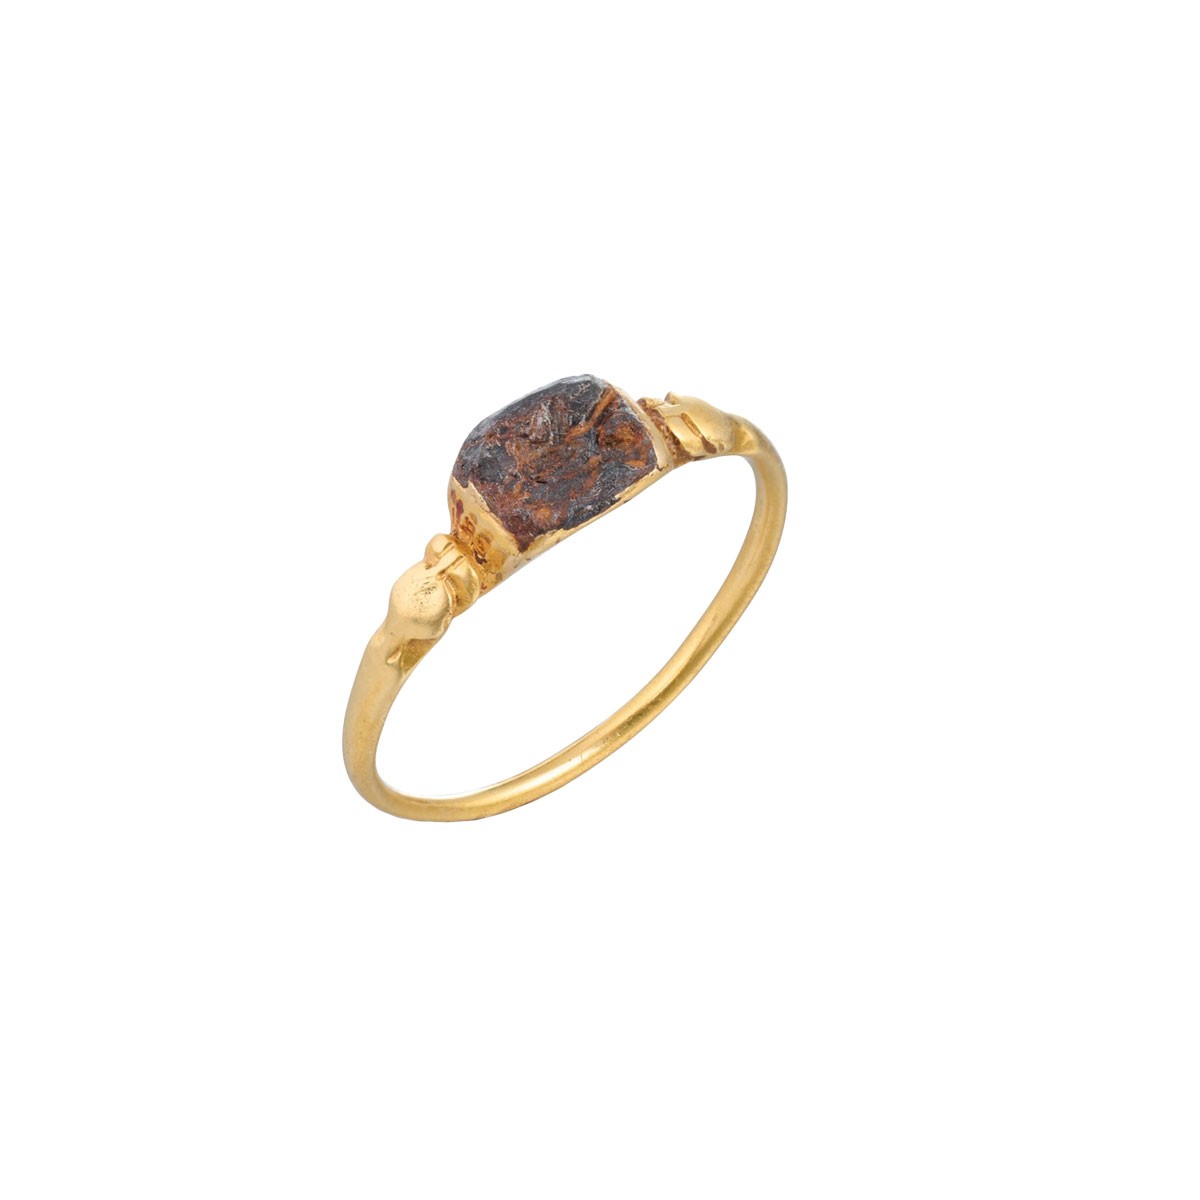 Buy Meteorite Ring Set, Black Wedding Rings for Him and Her, Black Diamond  Engagement Ring and Men's Wedding Band With Meteorite & Mokume Gane Online  in India - Etsy